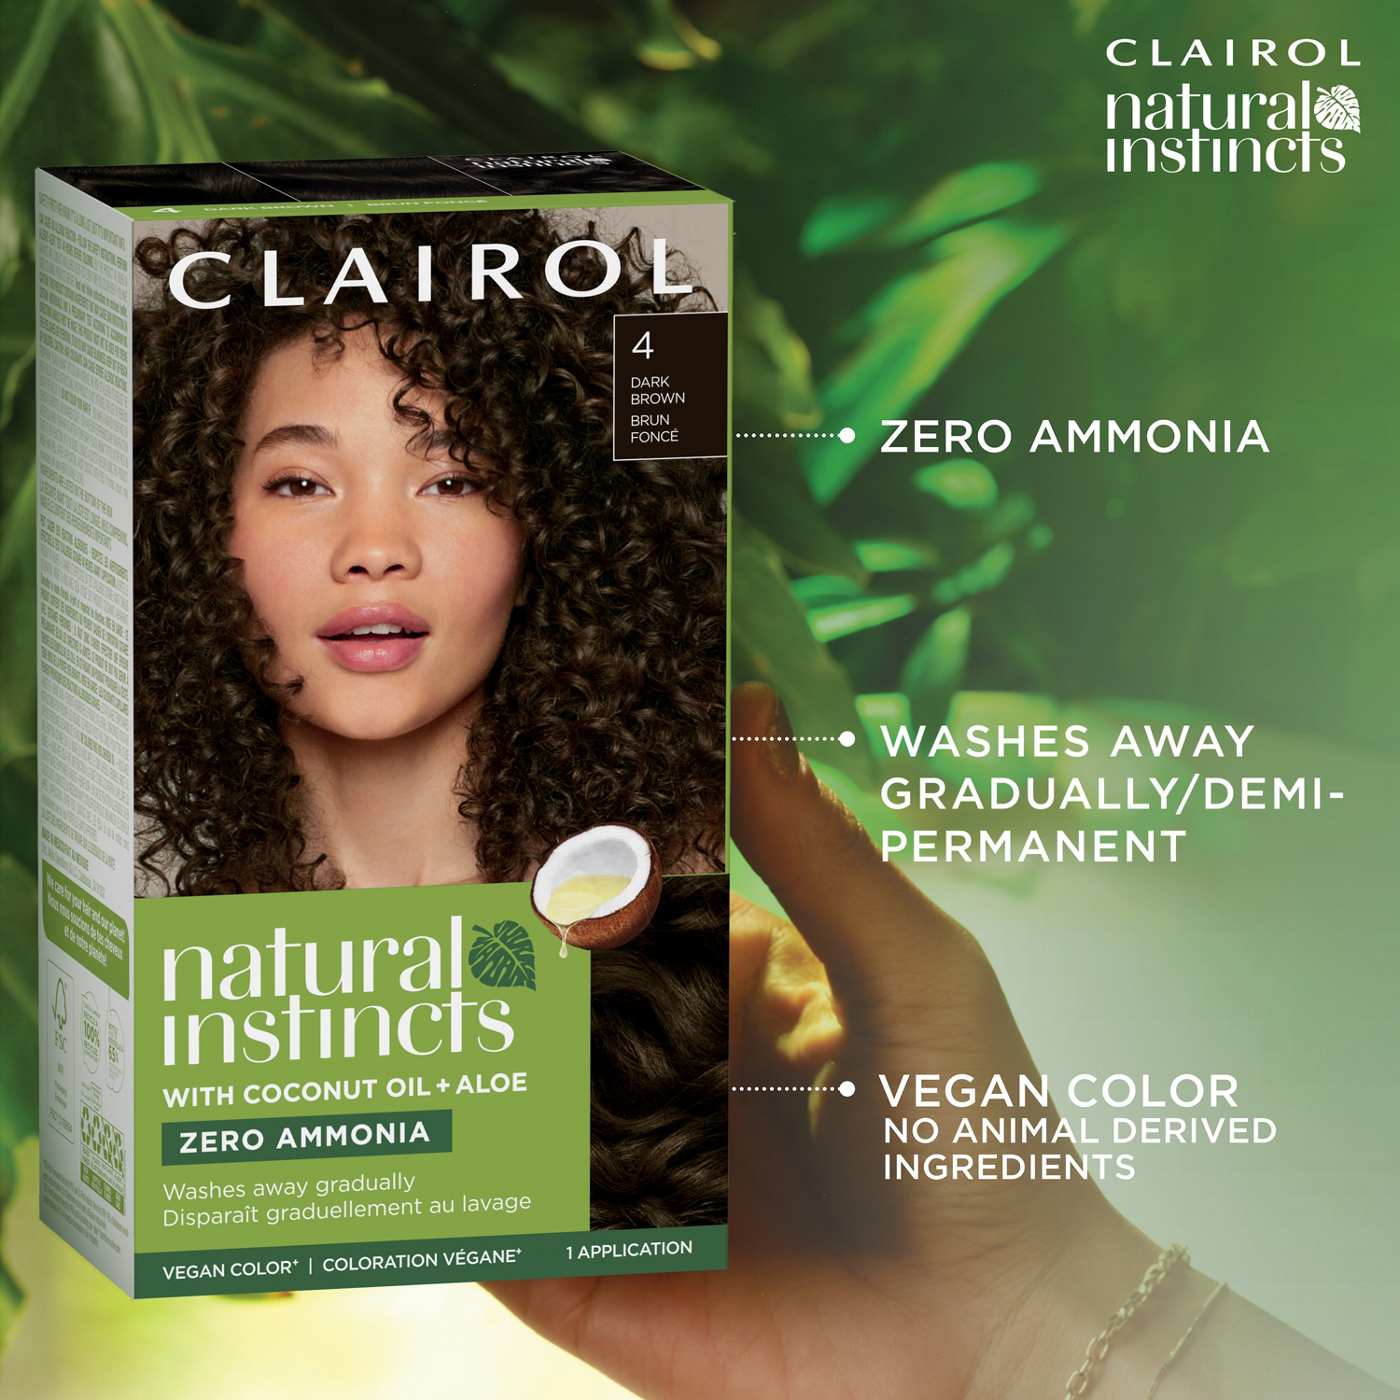 Clairol Natural Instincts Vegan Demi-Permanent Hair Color - 1BB Intense Blue Black; image 6 of 10